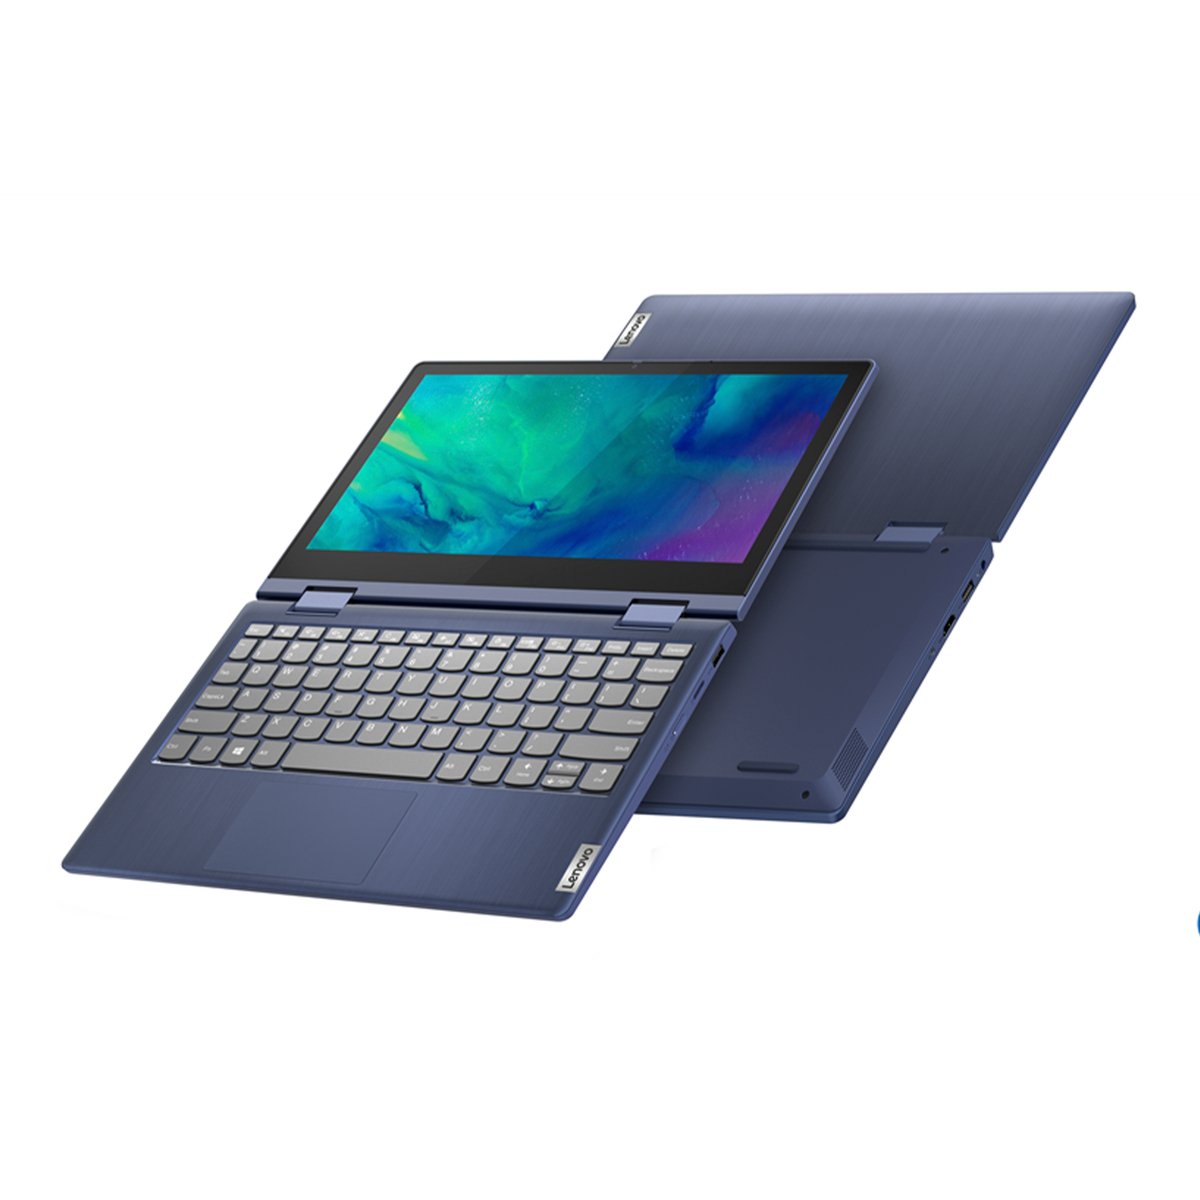 Lenovo IdeaPad Flex 3-82B20036AX ,Intel Pentium N5030,4GB RAM,128GB SSD,Intel Integrated Graphics,11.6" HD LED,Windows 10, Blue